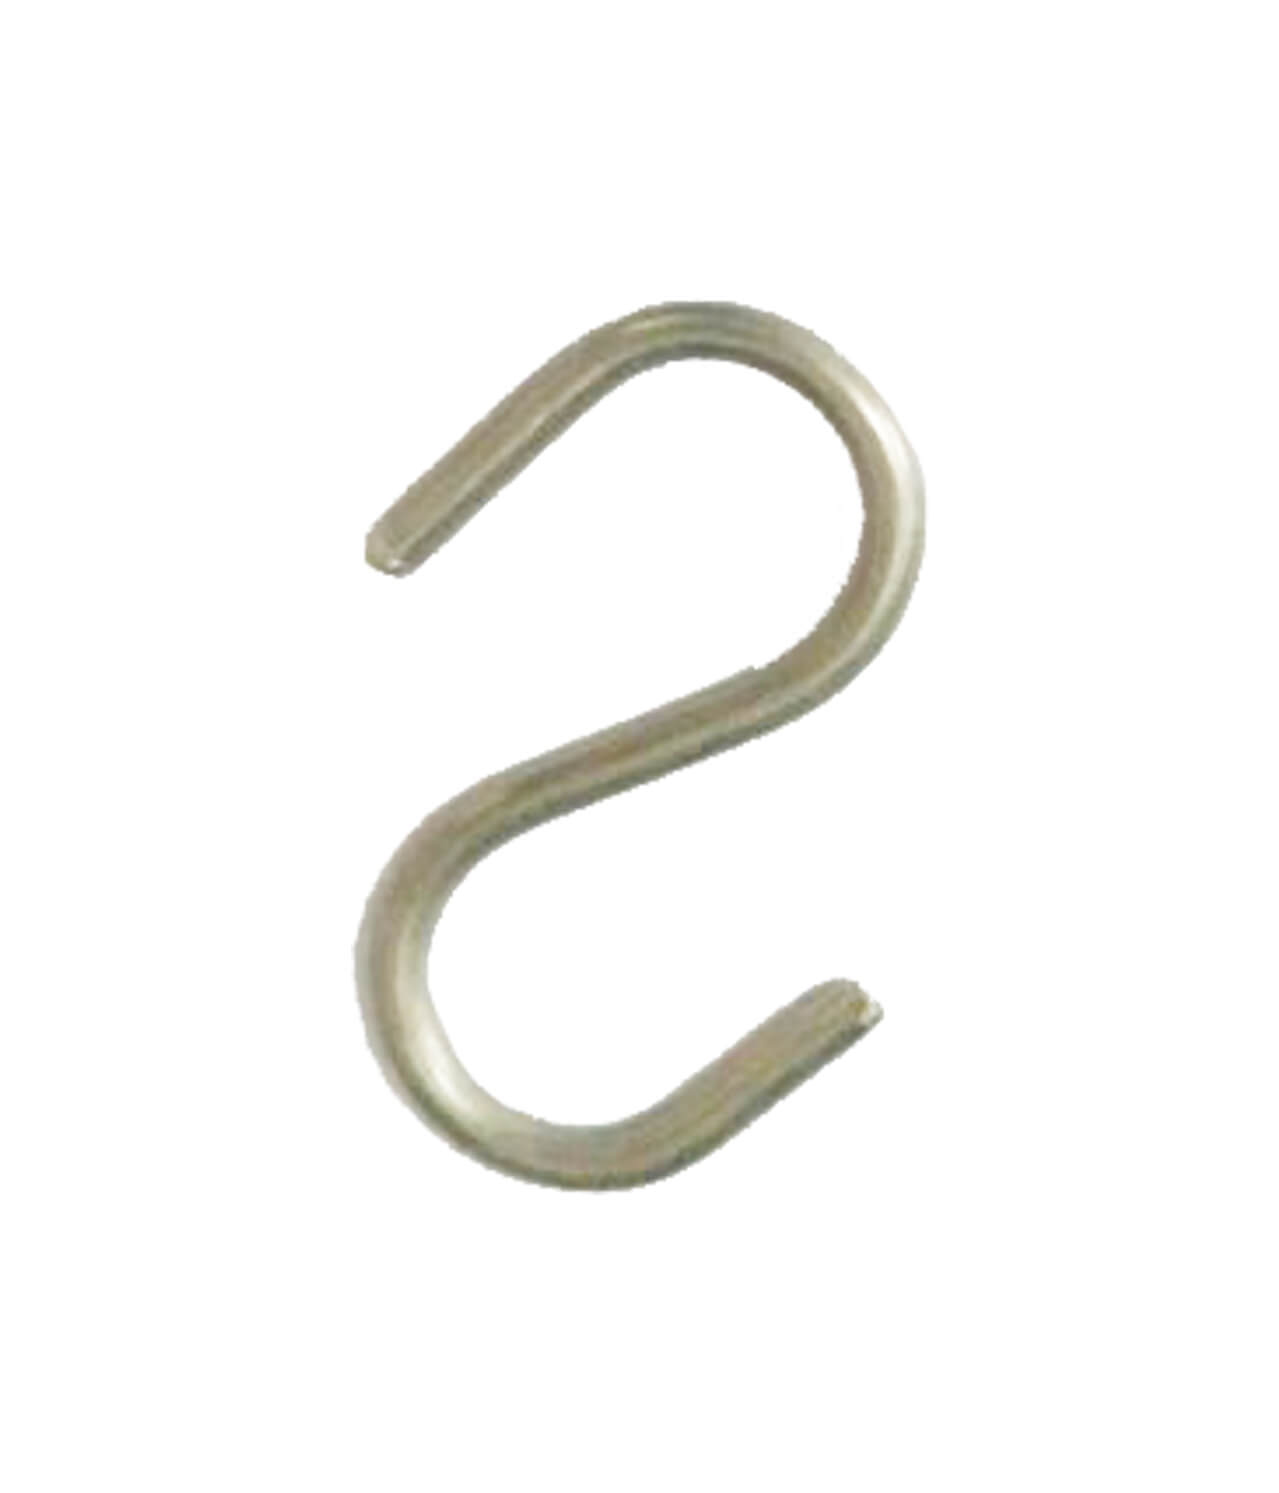 1 Inch stainless steel S-Hook ( 5 Hooks Pack )